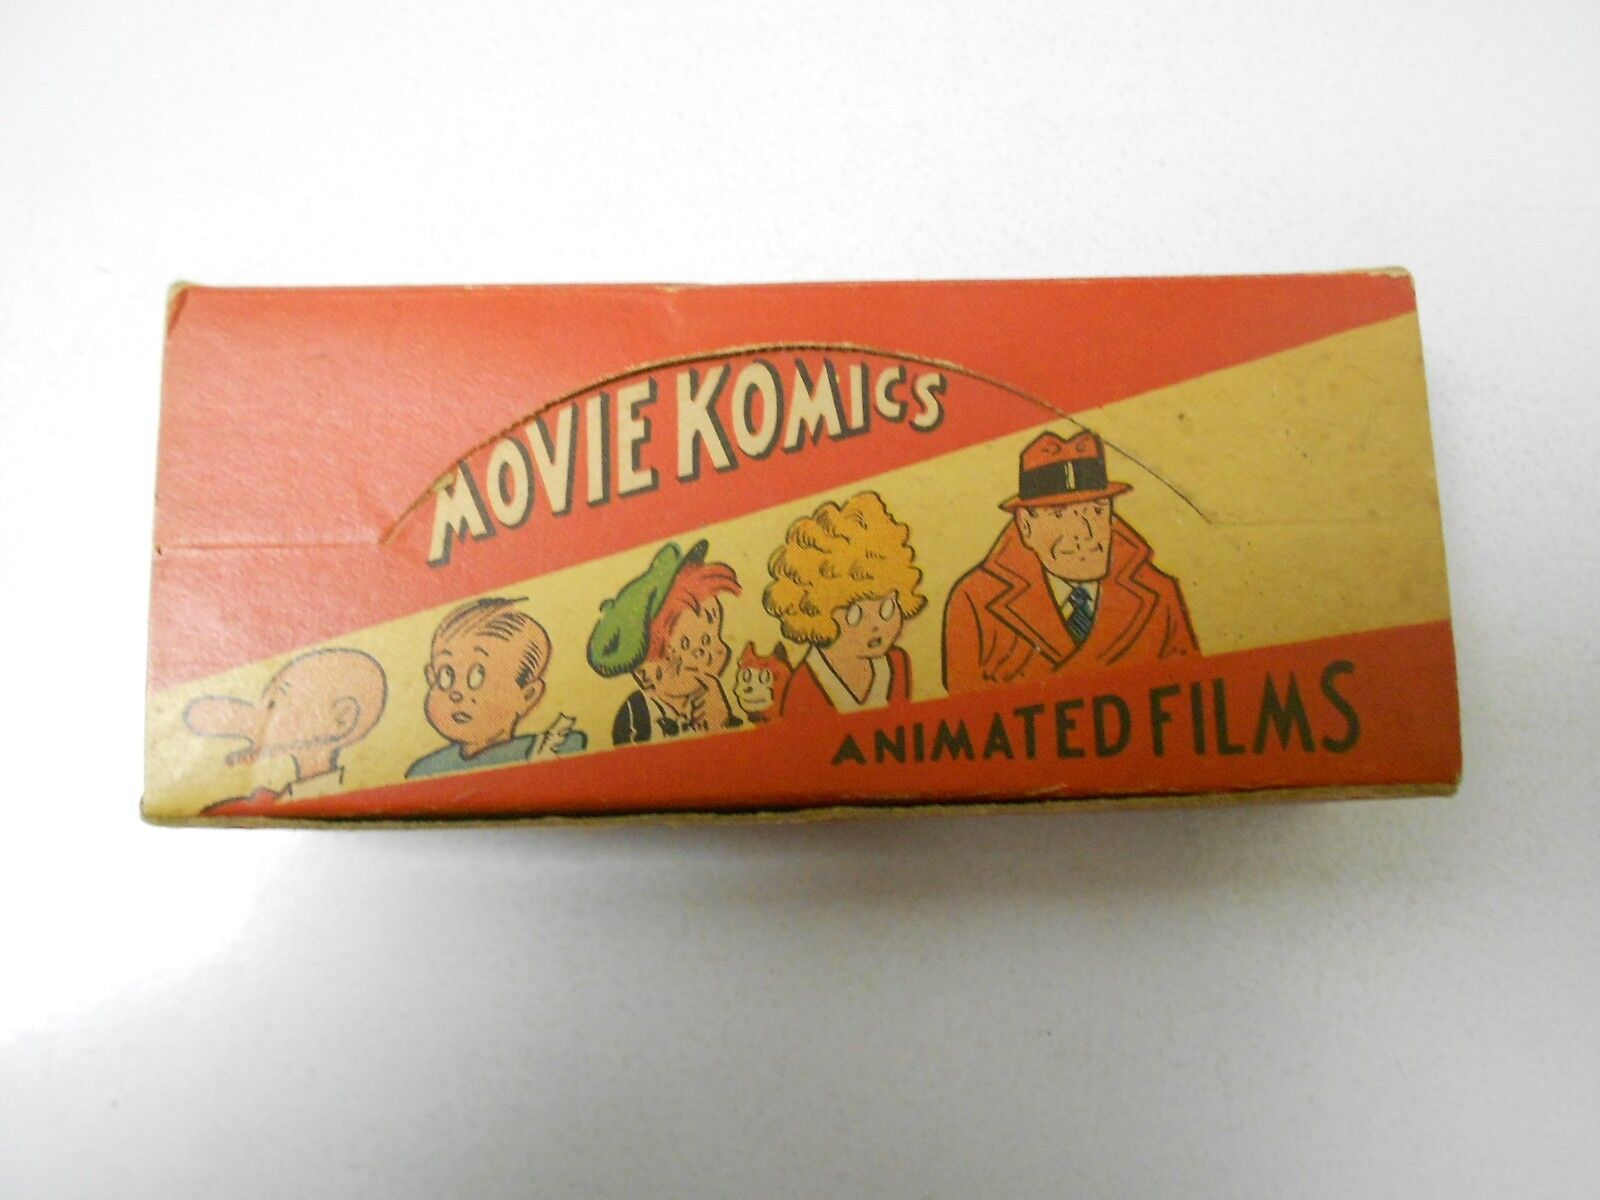 1947 MOVIE KOMICS Animated Films BOX 5 Dick Tracy Smilin Jack Winnie Winkle #300